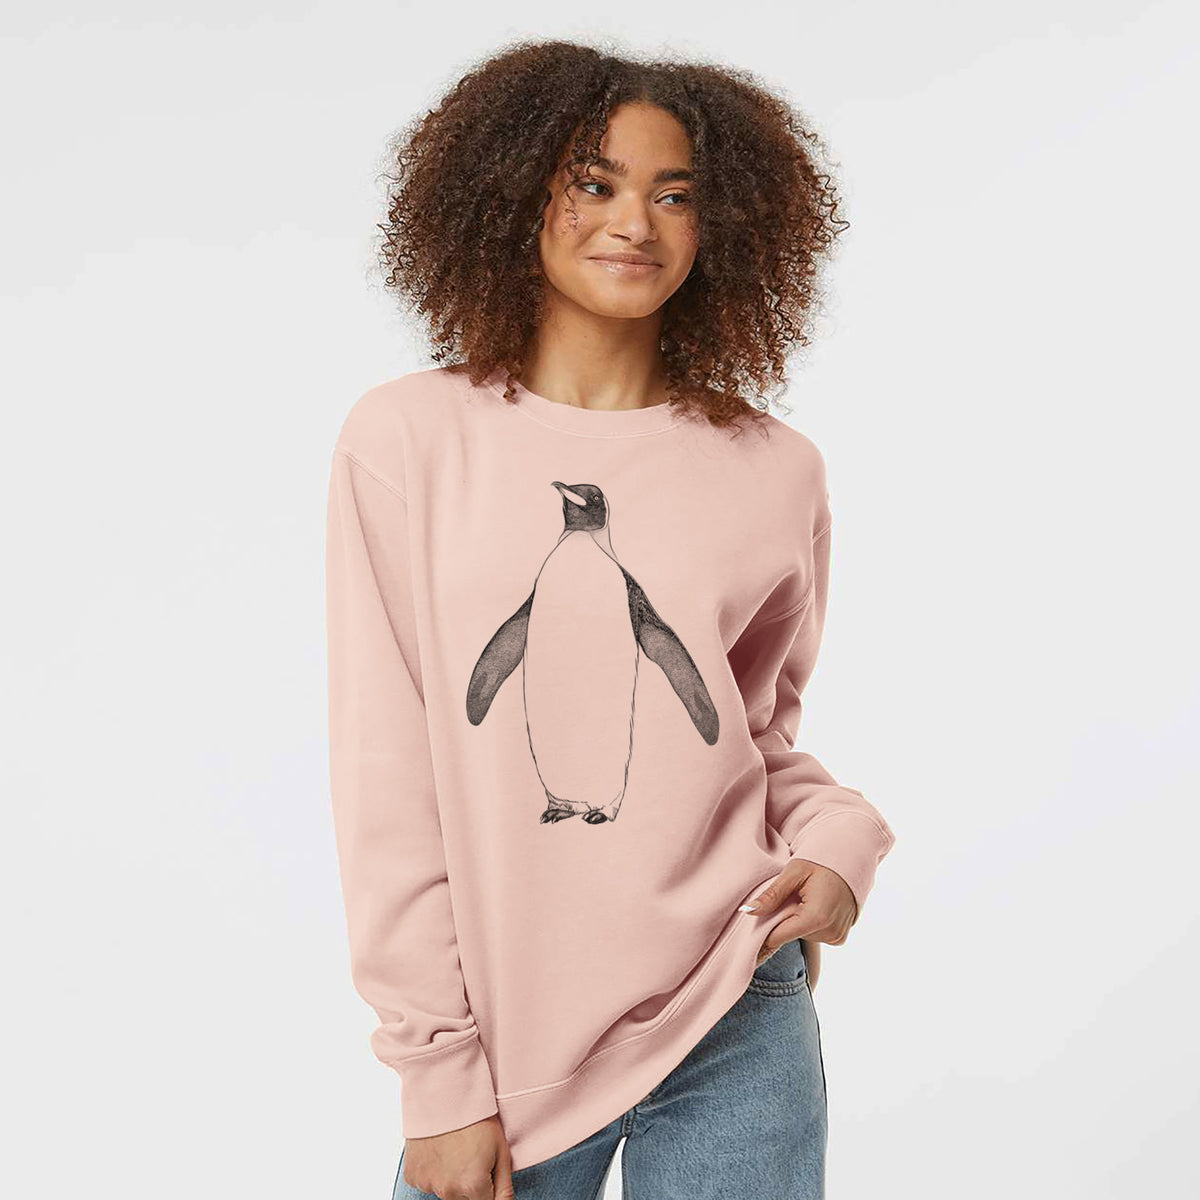 Emperor Penguin - Aptenodytes forsteri - Unisex Pigment Dyed Crew Sweatshirt